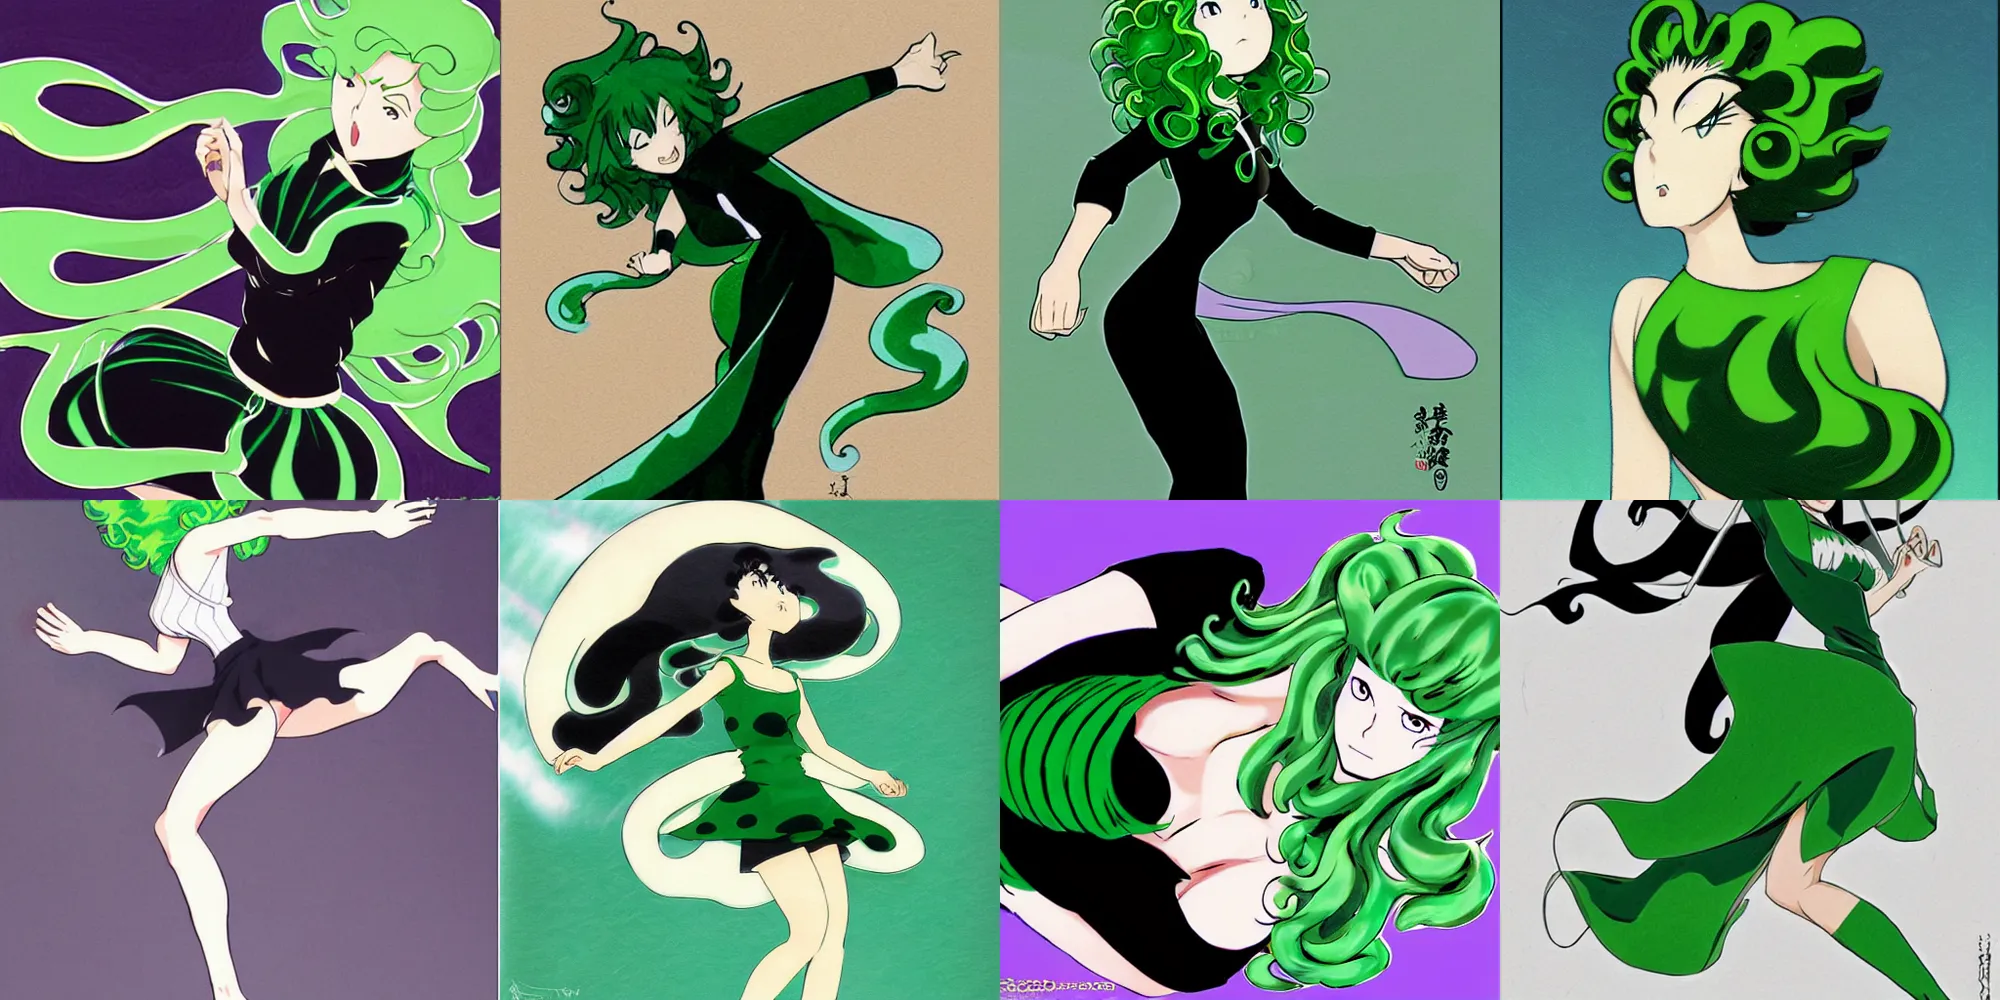 Prompt: tatsumaki, a woman with wavy green hair and a black dress, concept art by rumiko takahashi, deviantart contest winner, superflat, official art, deviantart hd, dynamic pose